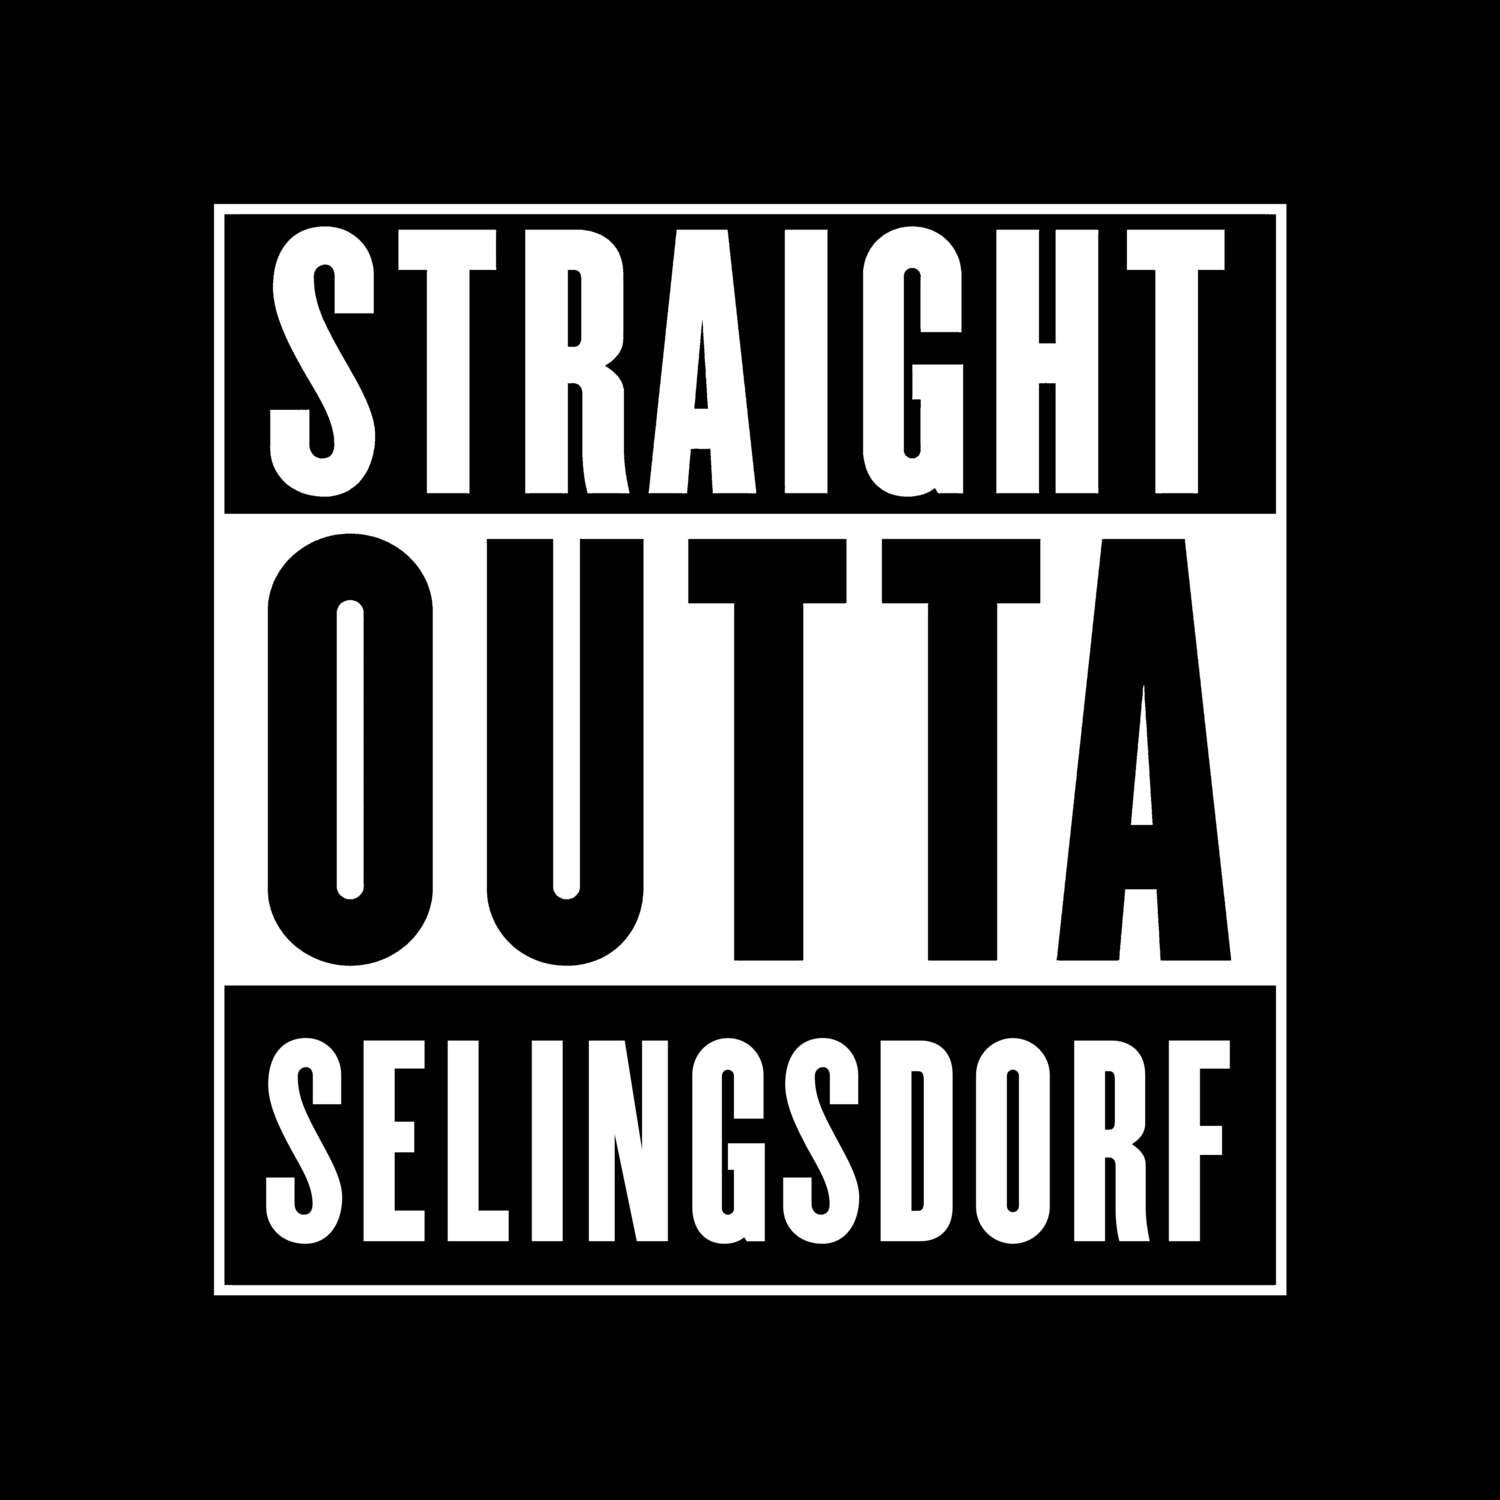 Selingsdorf T-Shirt »Straight Outta«